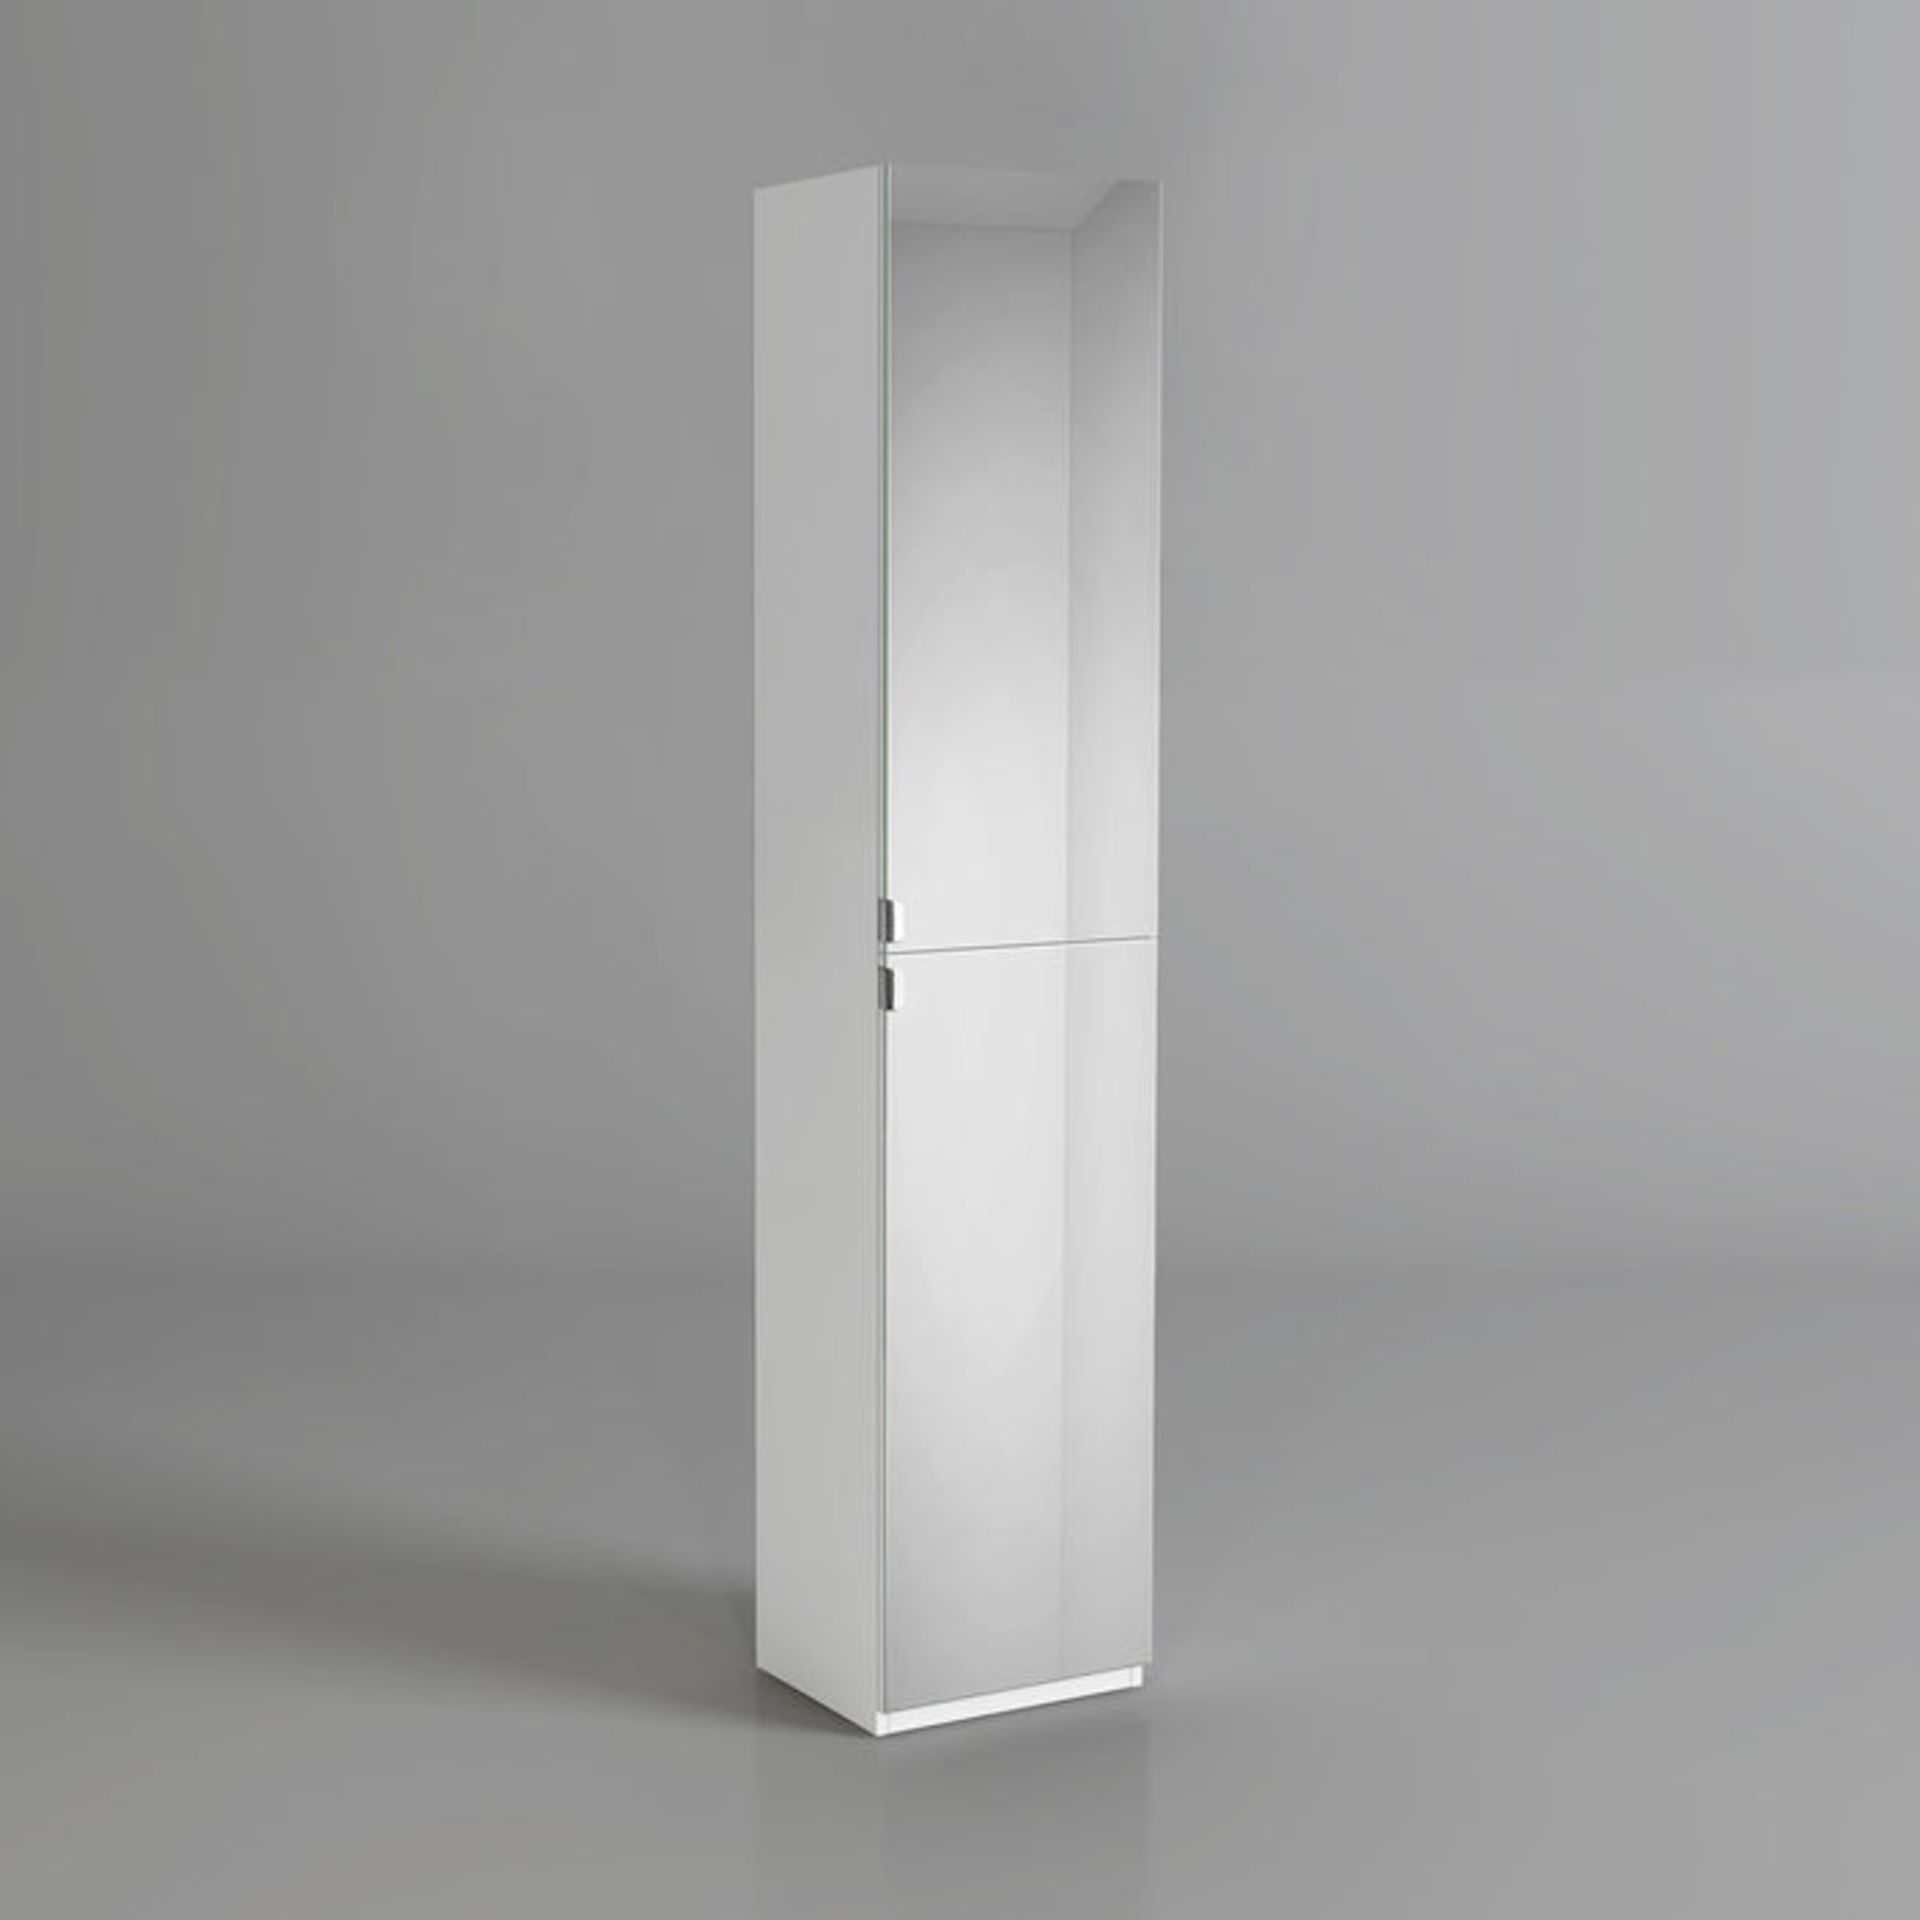 (Q33) 1700x350mm Mirrored Door Matte White Tall Storage Cabinet - Floor Standing. RRP £349.99. Enjoy - Image 4 of 4